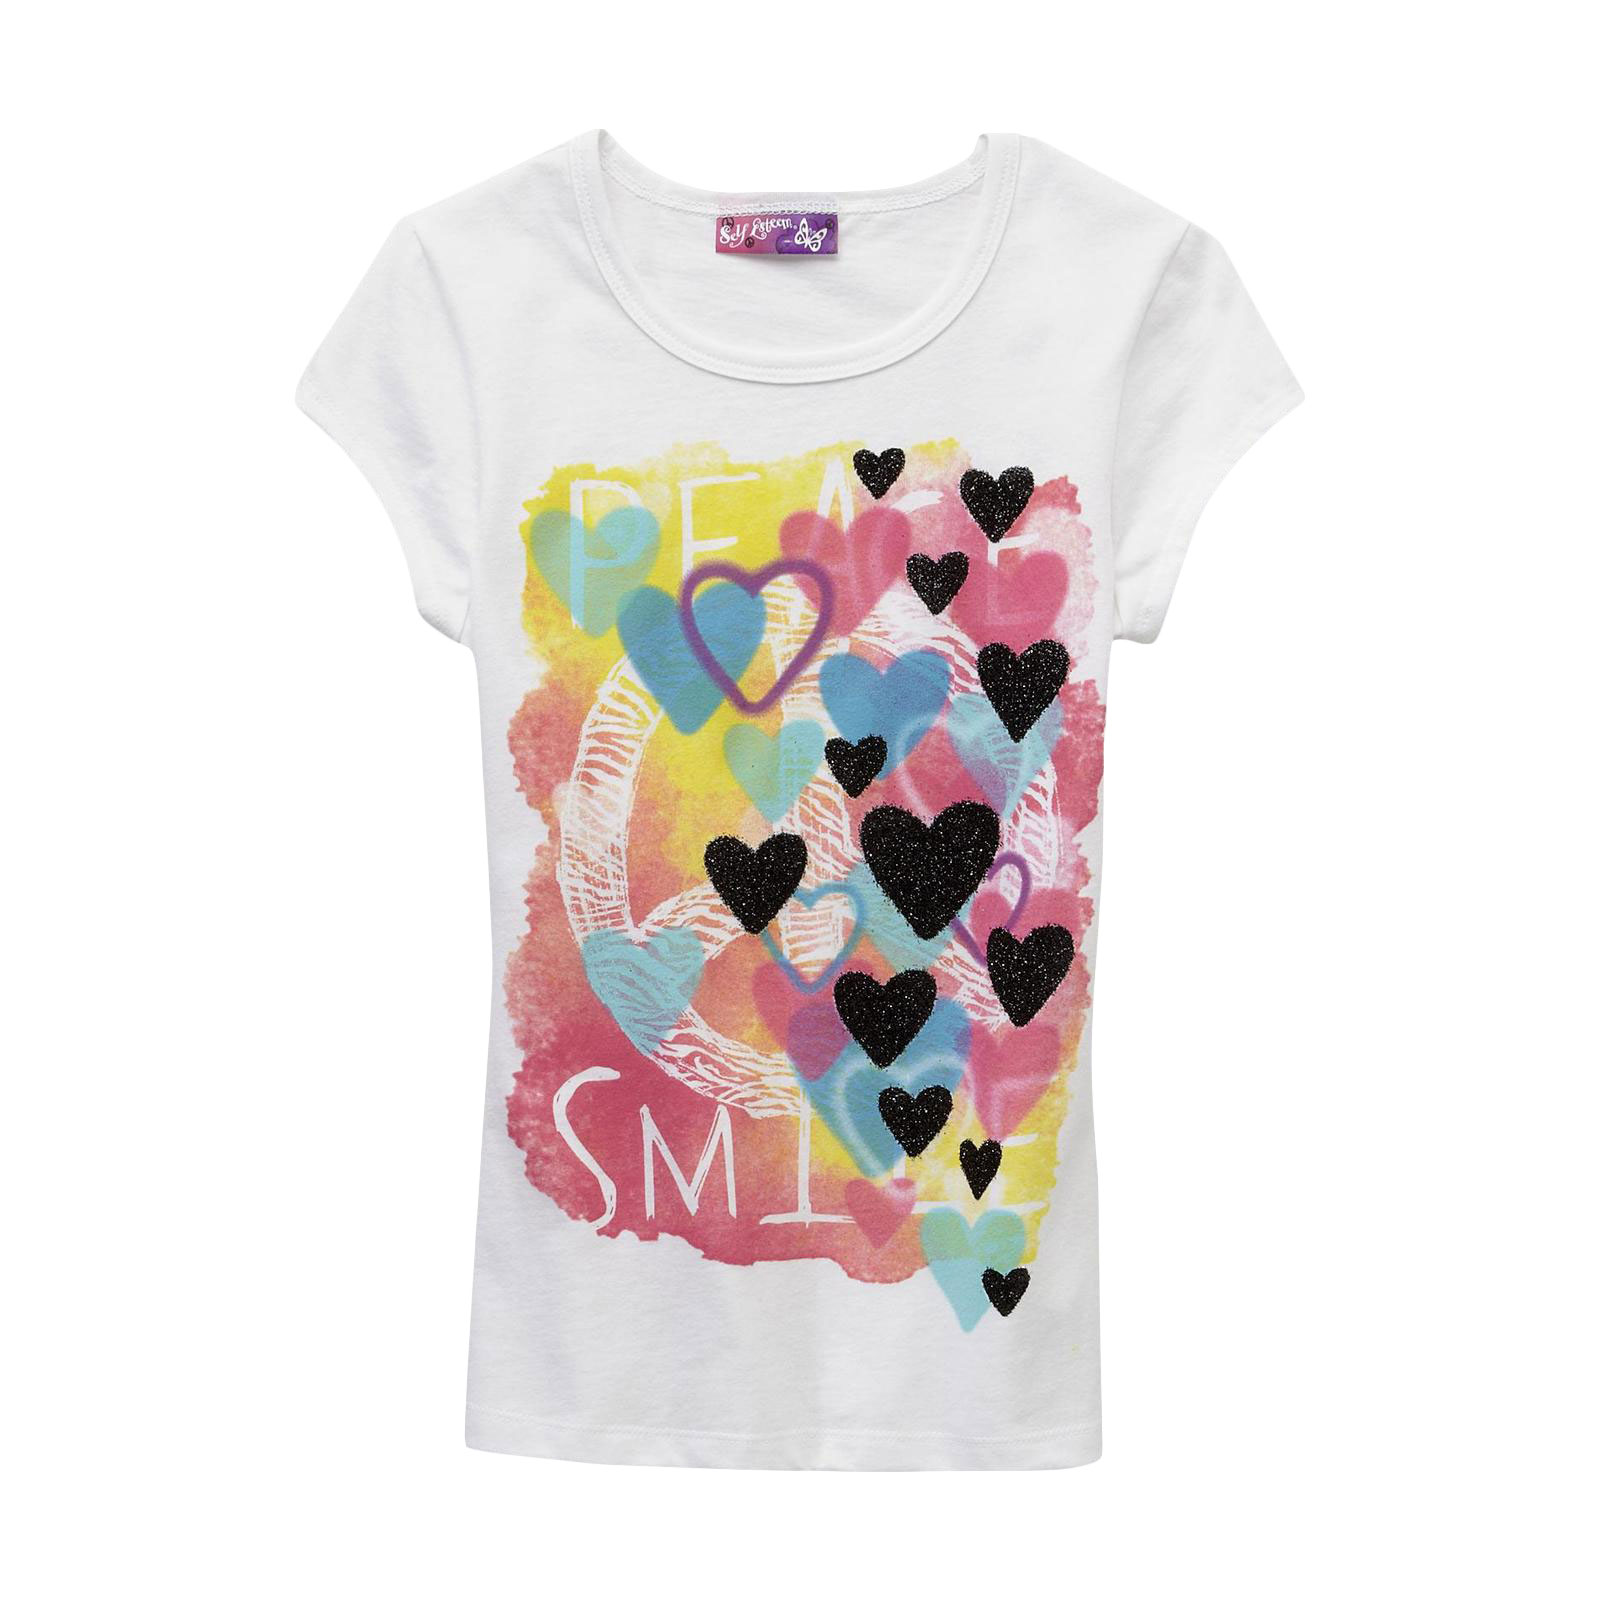 Self Esteem Girl's Graphic T-Shirt - Hearts